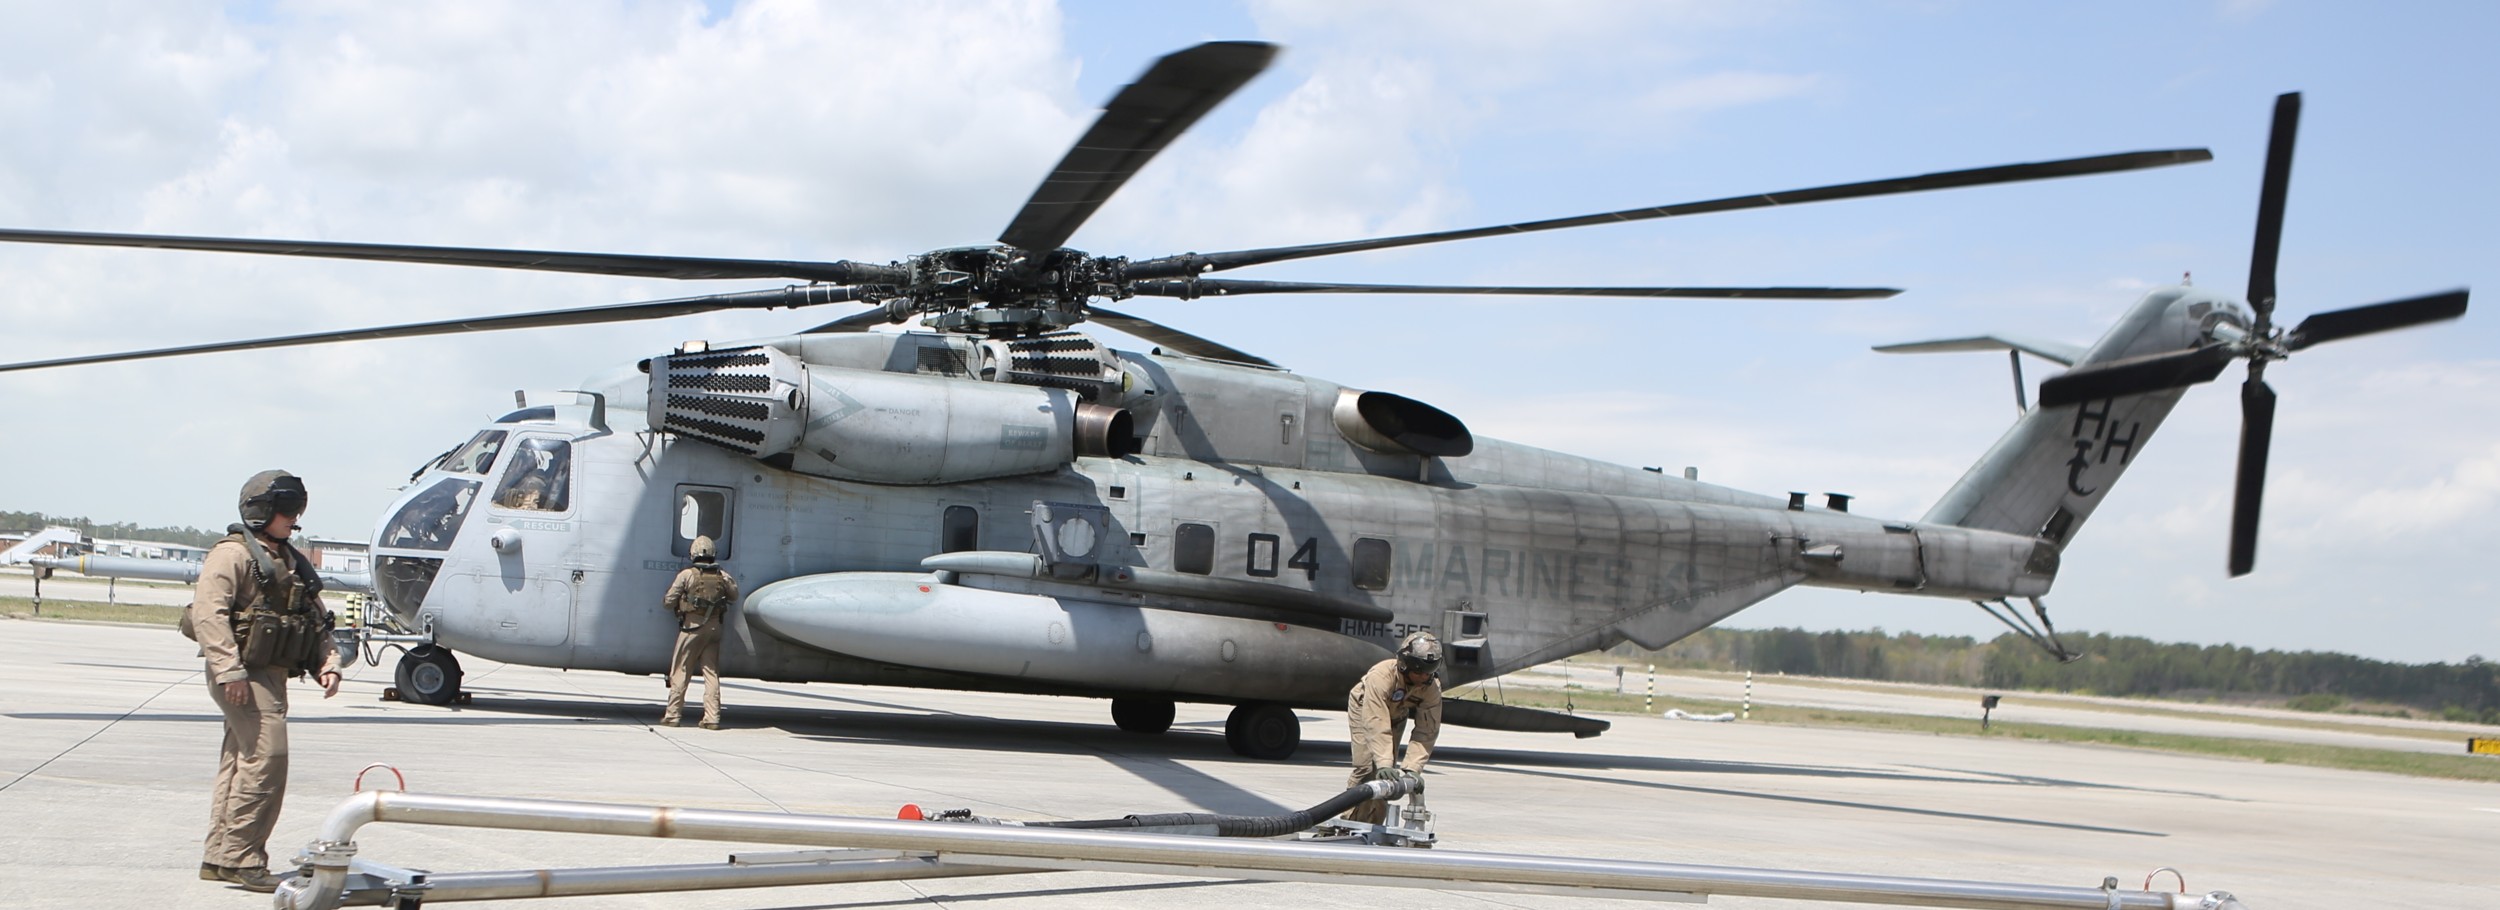 hmh-366 hammerheads marine heavy helicopter squadron usmc sikorsky ch-53e super stallion 43